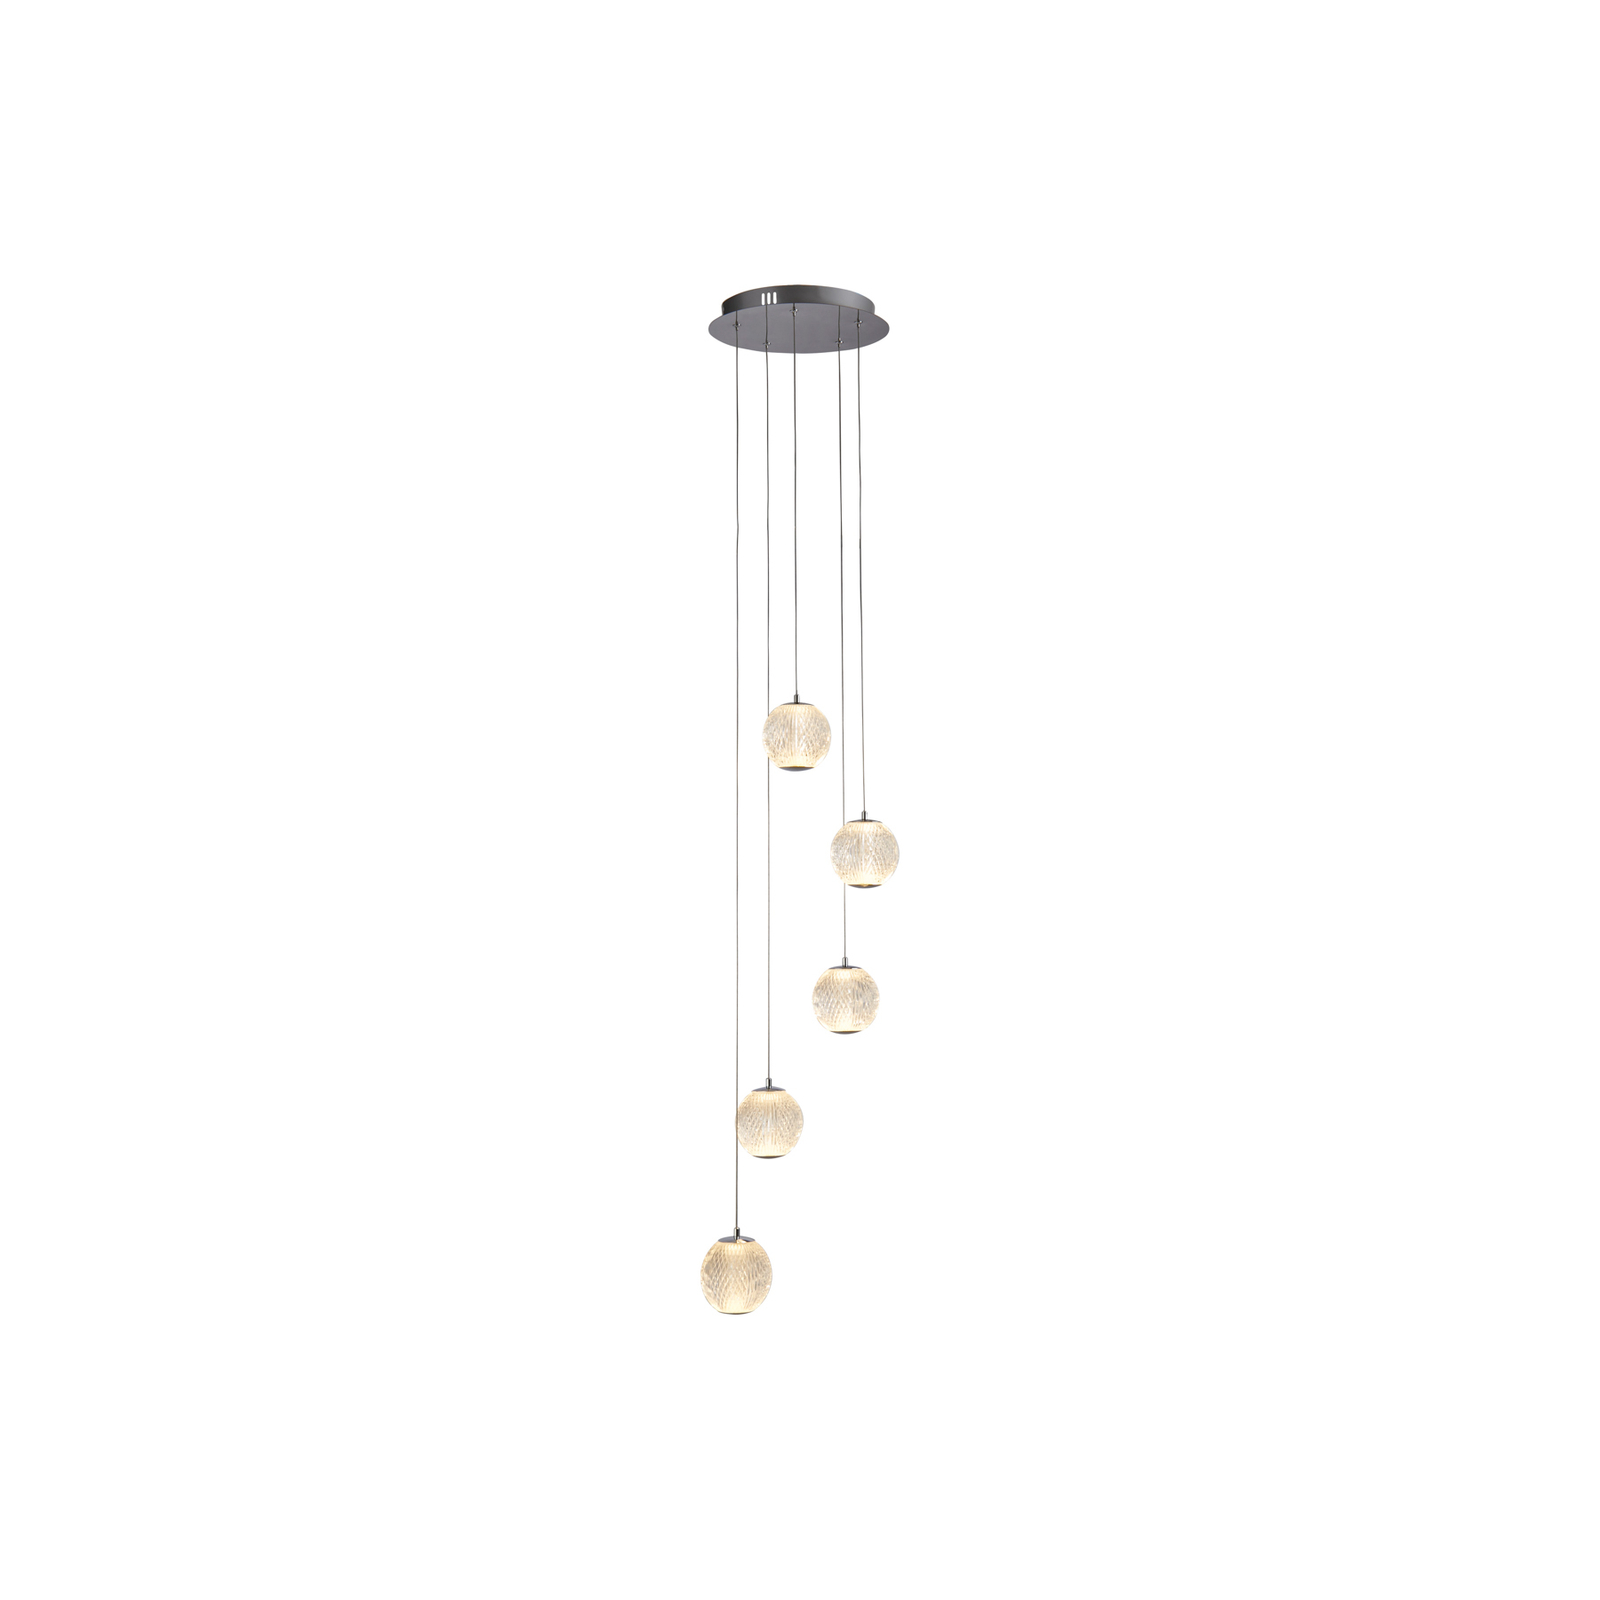 LED pendant light Allure, round, 5-bulb